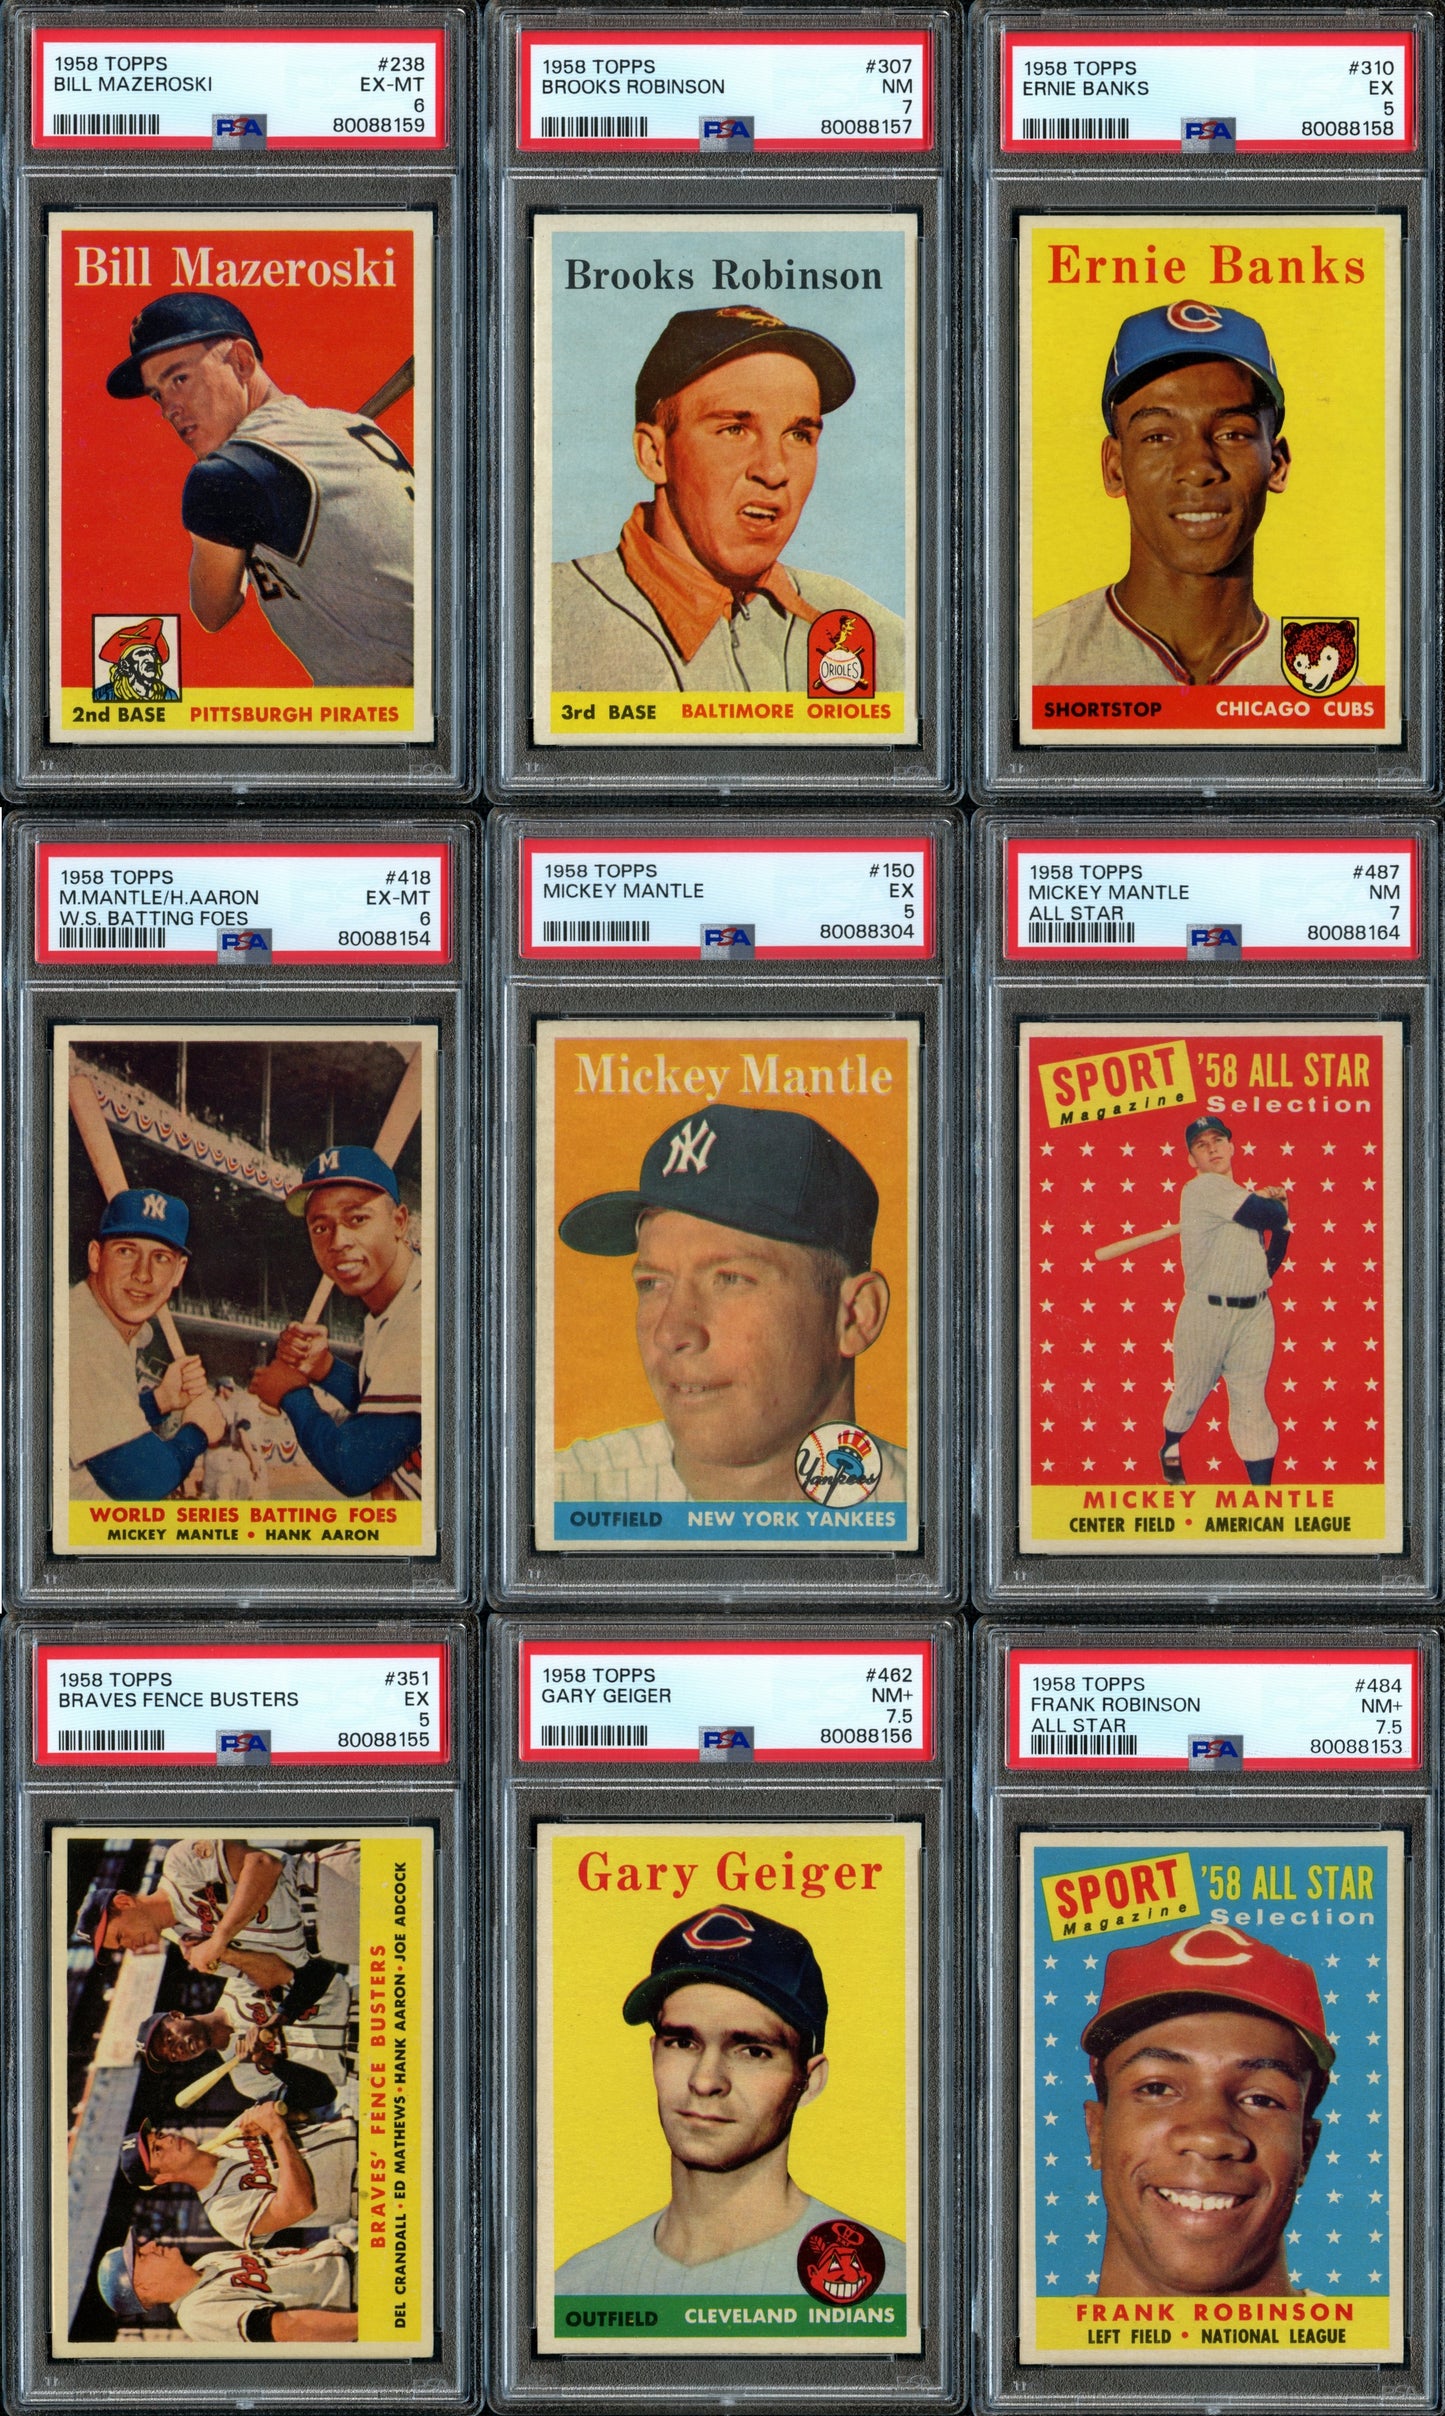 1958 Topps Baseball Set Break 494 Spot Random Card (Mickey Mantle PSA 5, Mickey Mantle All-Star PSA 7, Batting Foes PSA 6, Brooks Robinson PSA 7, etc.!)